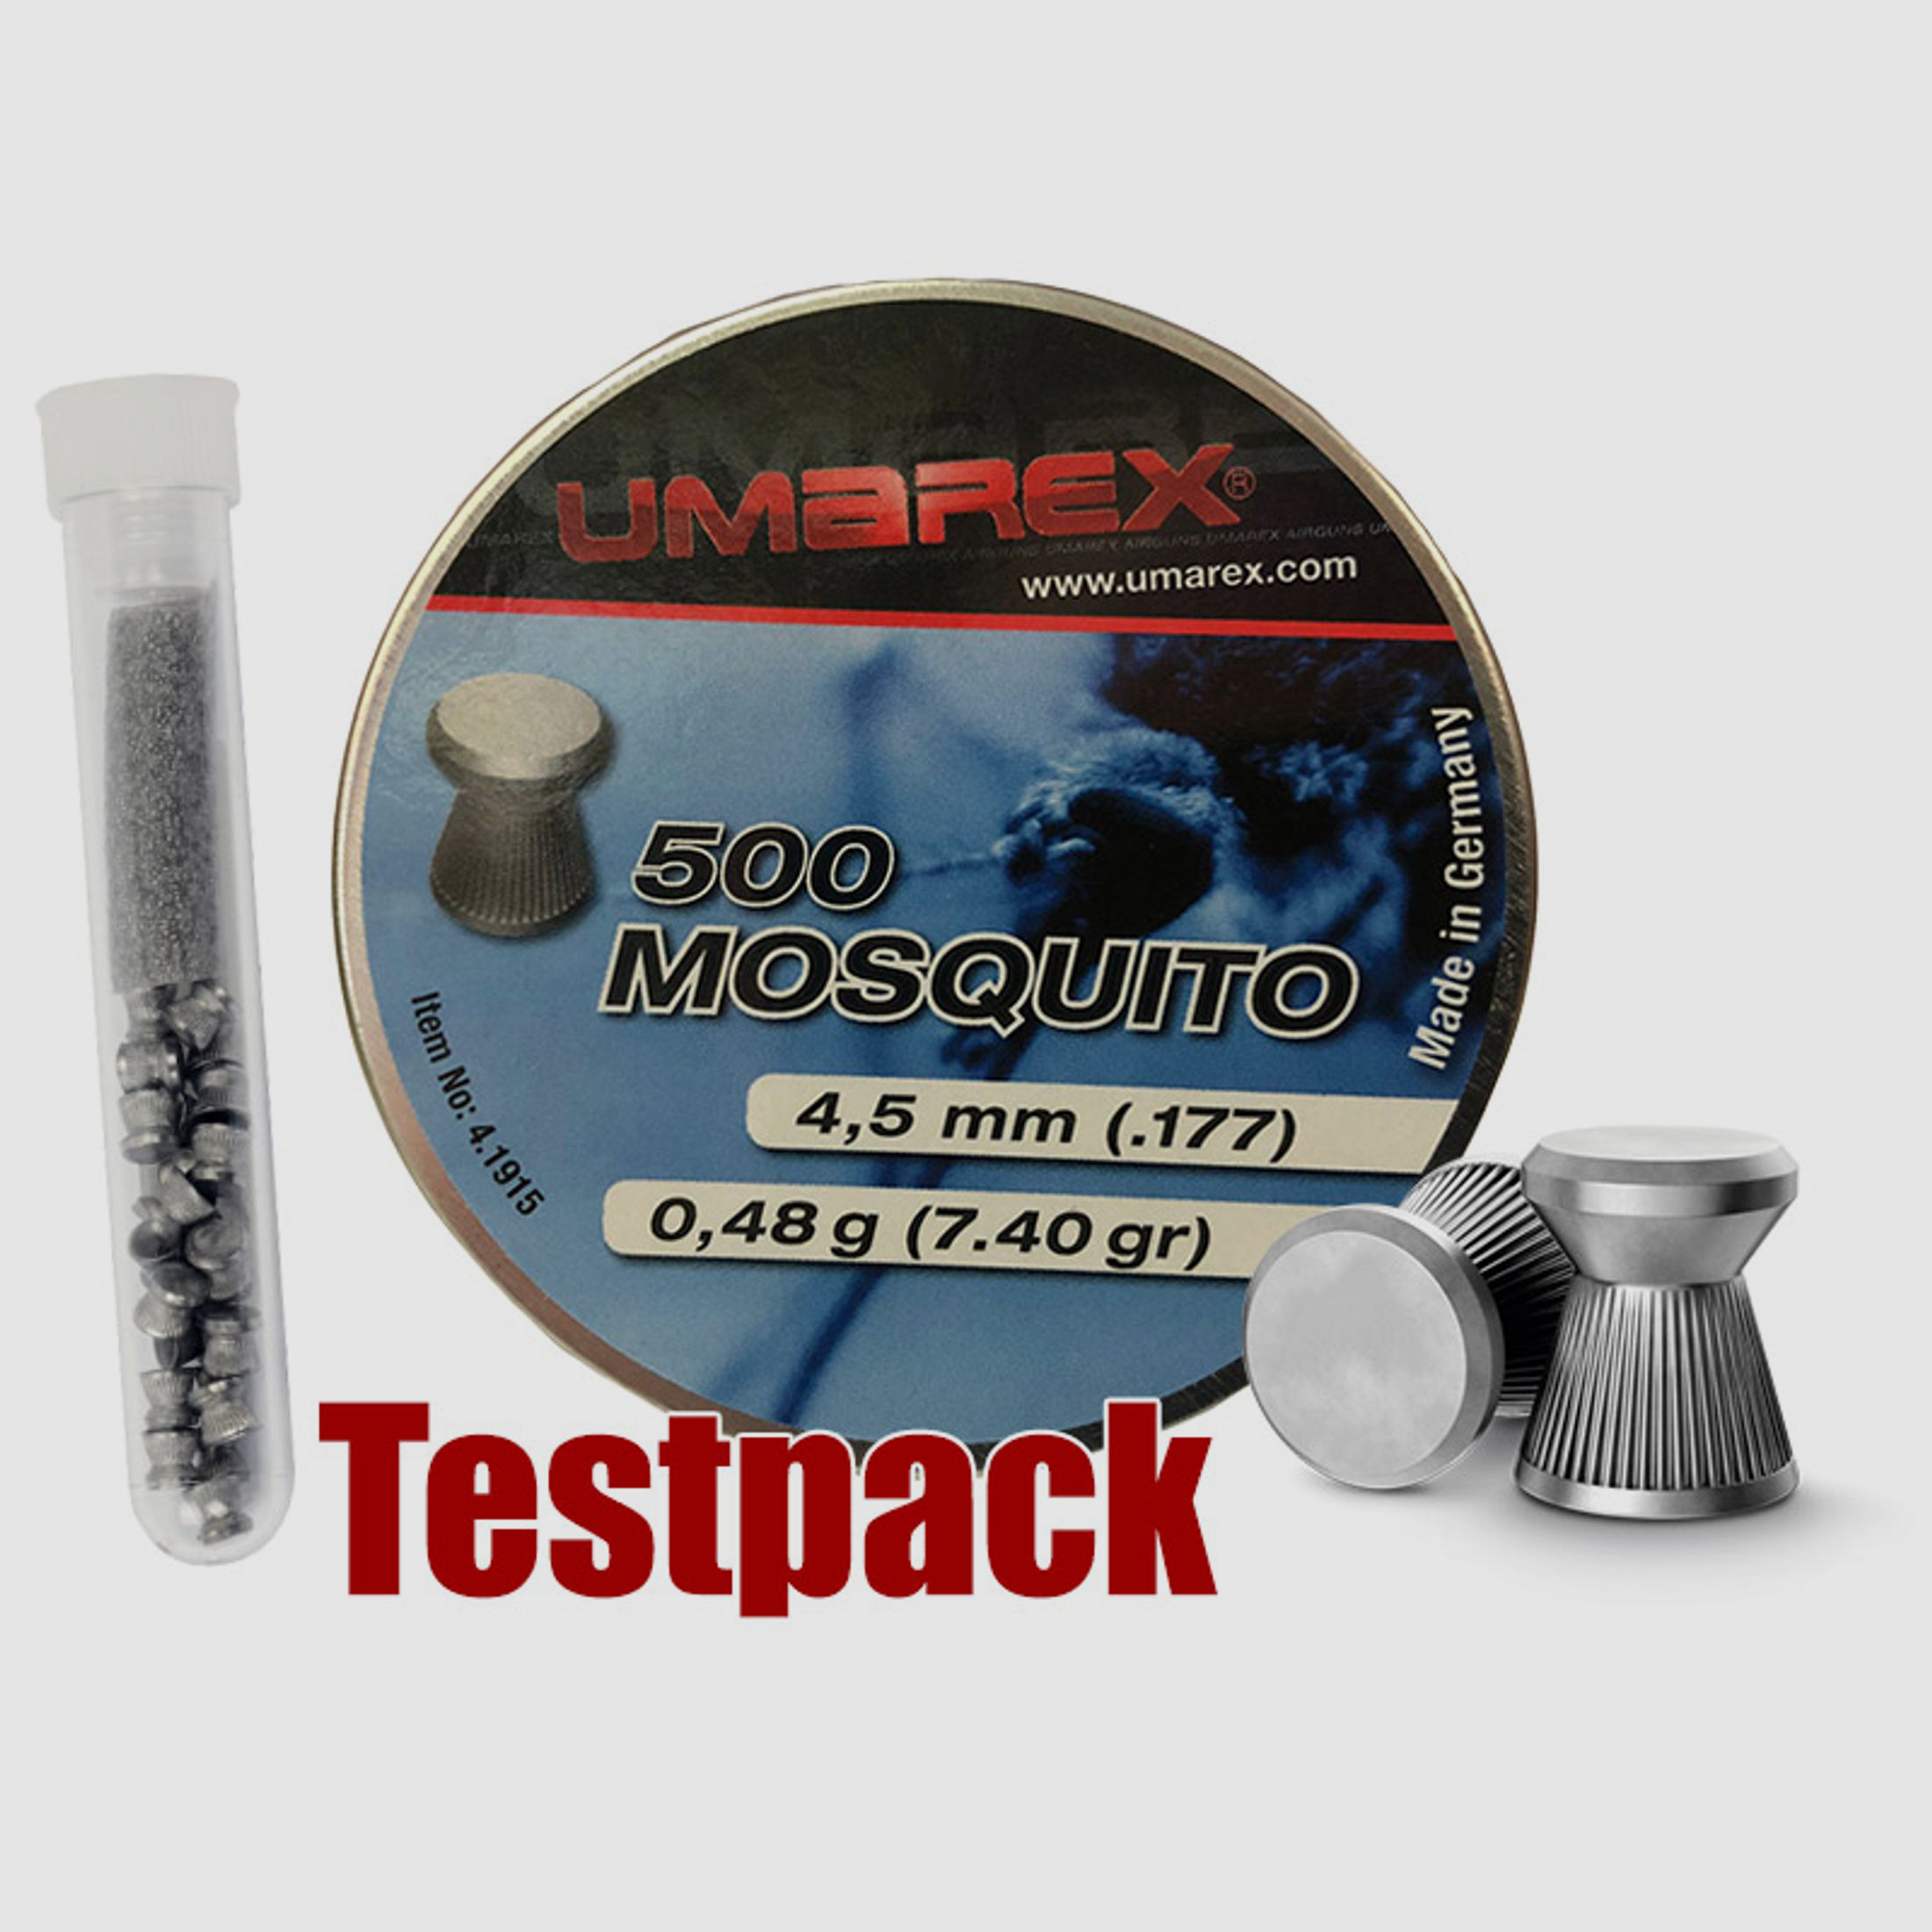 Testpack Flachkopf Diabolos Umarex Mosquito Kaliber 4,5 mm 0,48 g geriffelt 40 StĂĽck